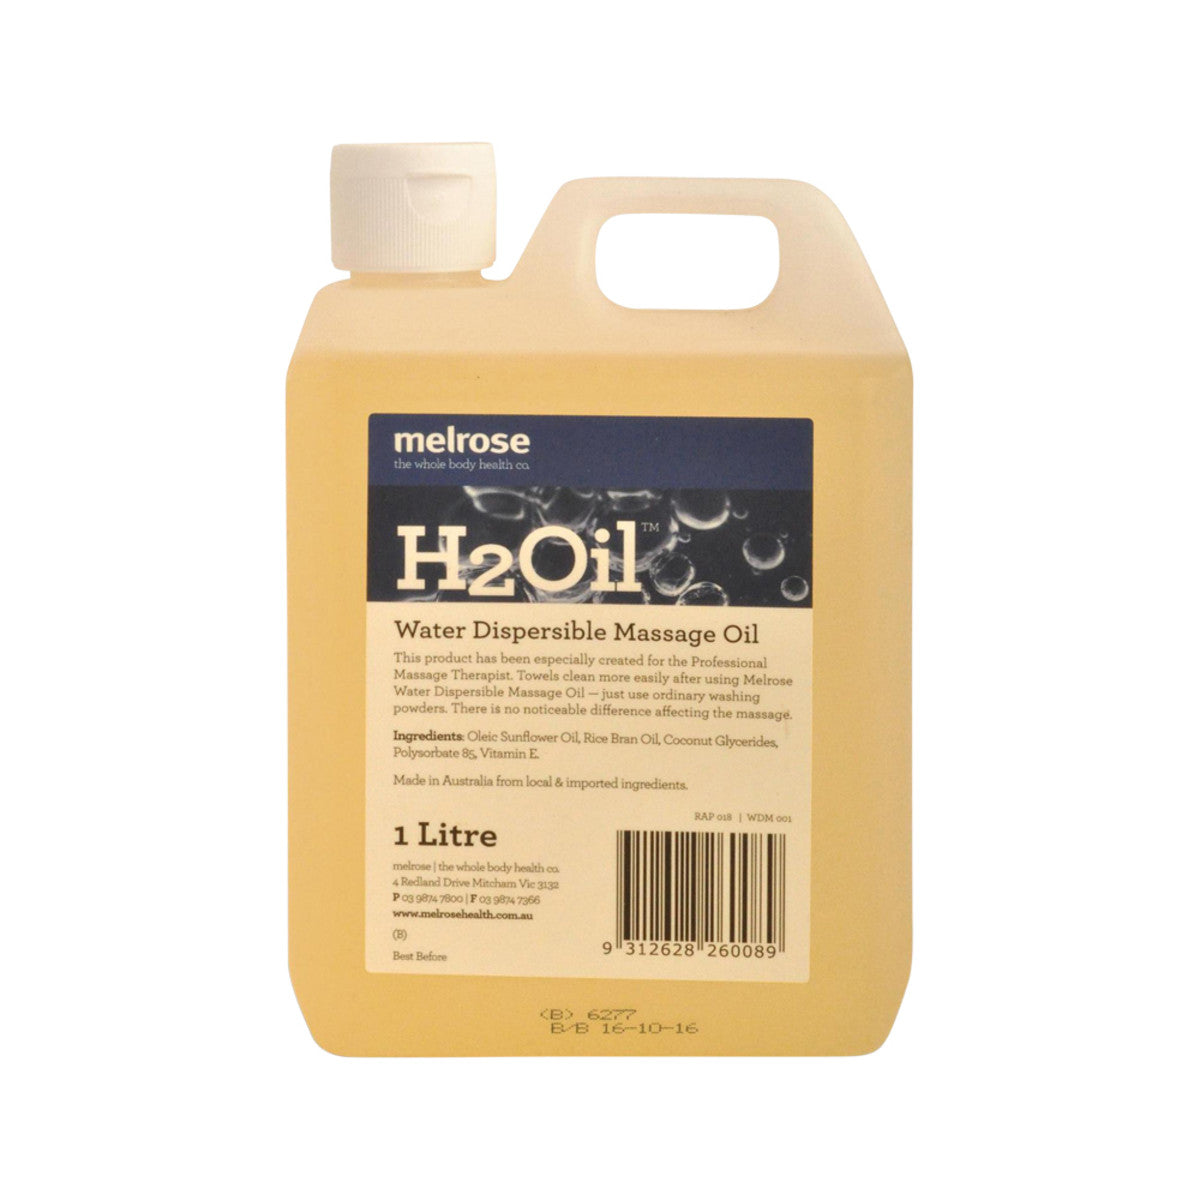 Melrose - H2Oil Water Dispersiible Massage Oil